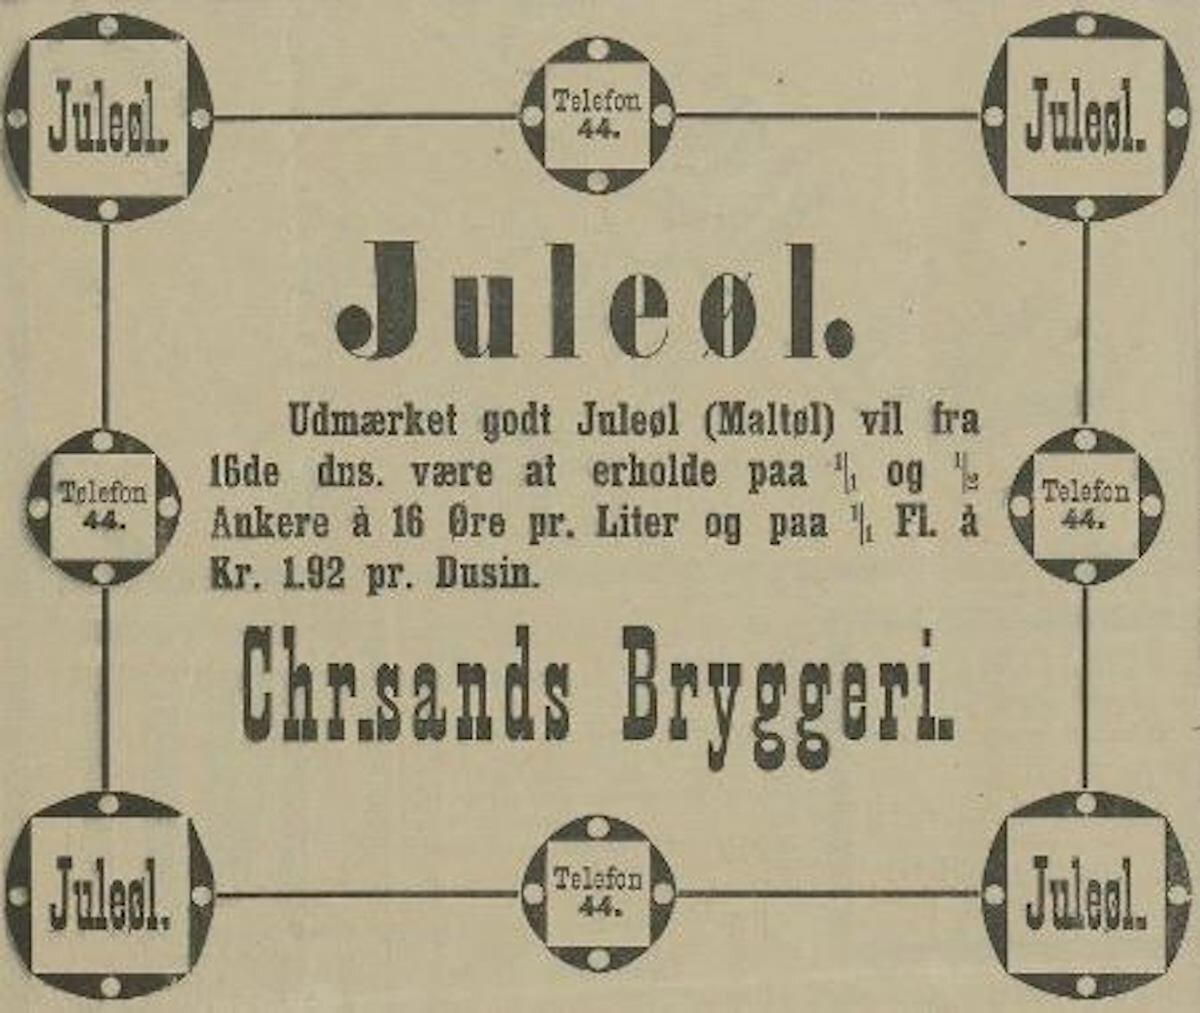 Vintage newspaper juleøl